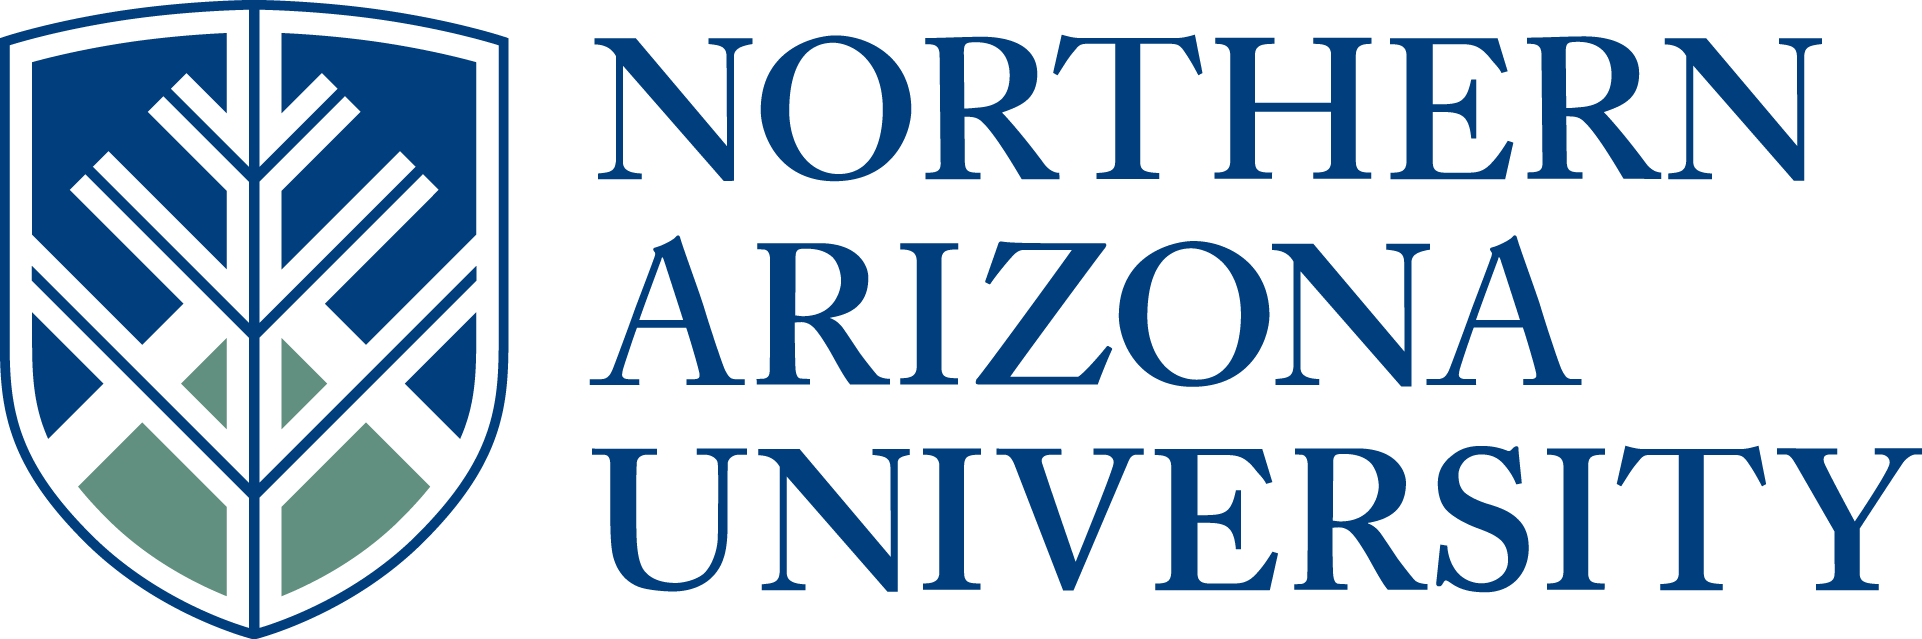 Nau Lumberjacks Logo - Northern arizona university lumberjacks Logos